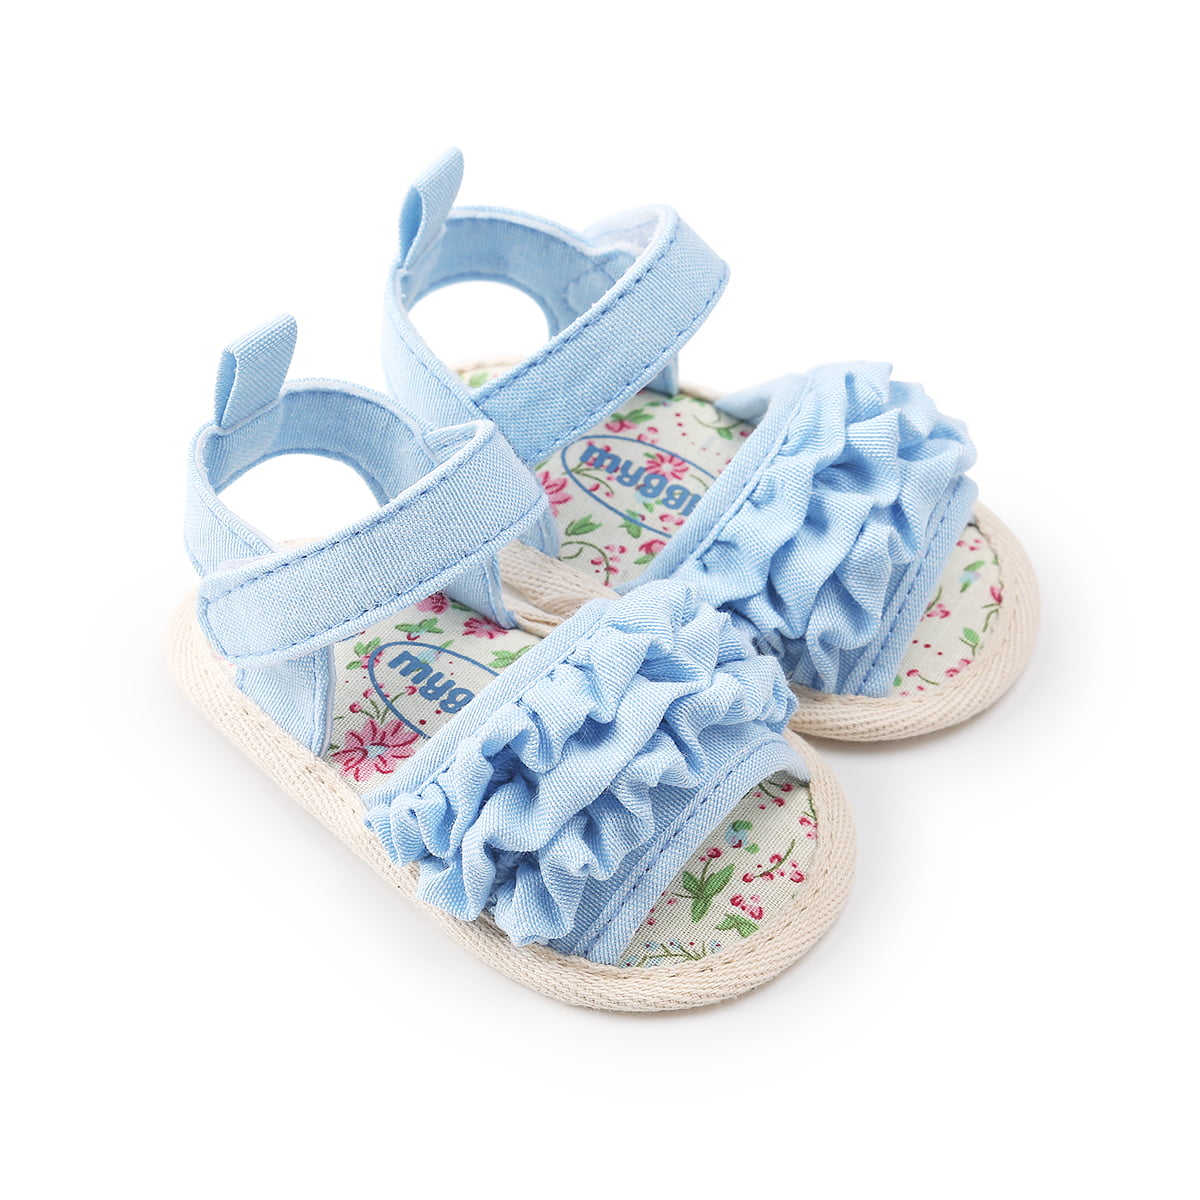 Iusun Sandles Infant Baby Girls Soft Sole Anti-Slip Crib Shoes Toddler Shoes